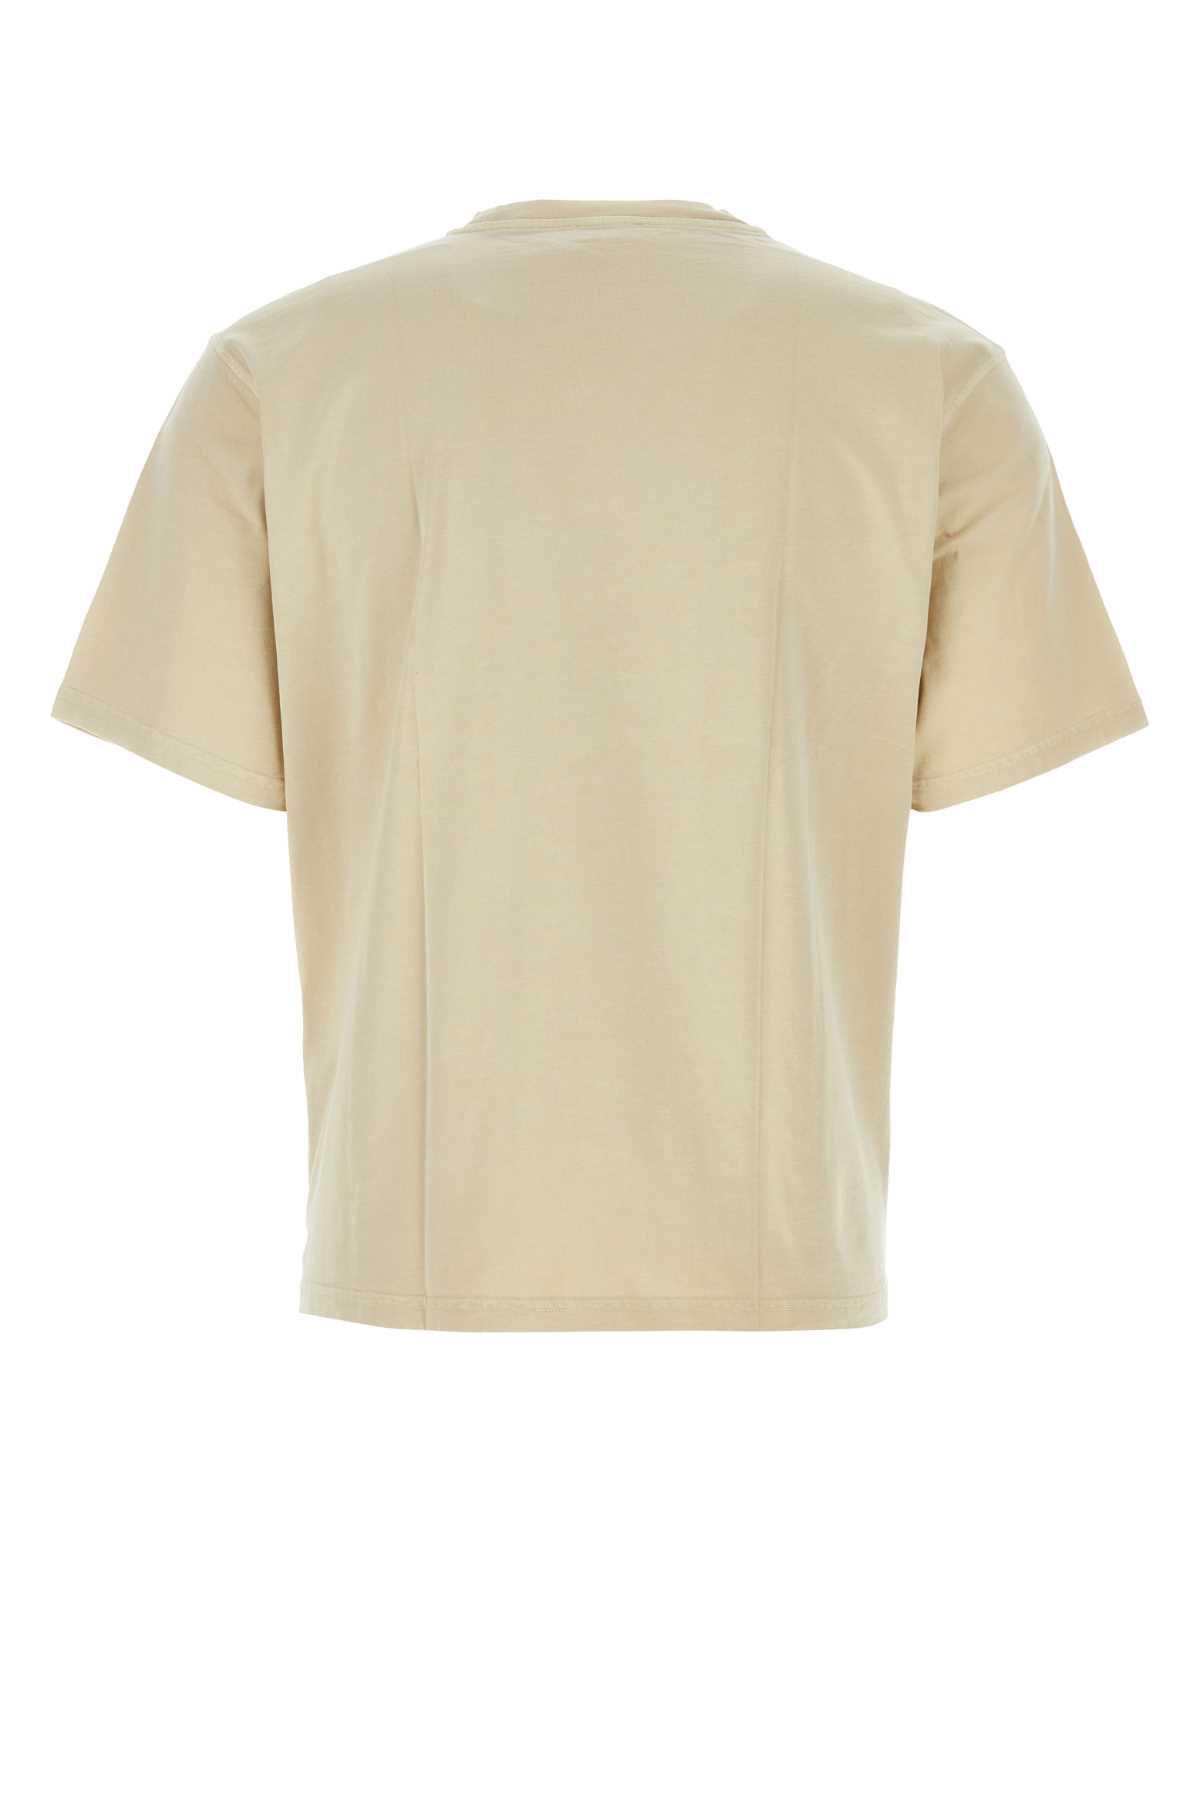 Nanushka Beige Cotton Reece T-shirt In Wordmarkshell